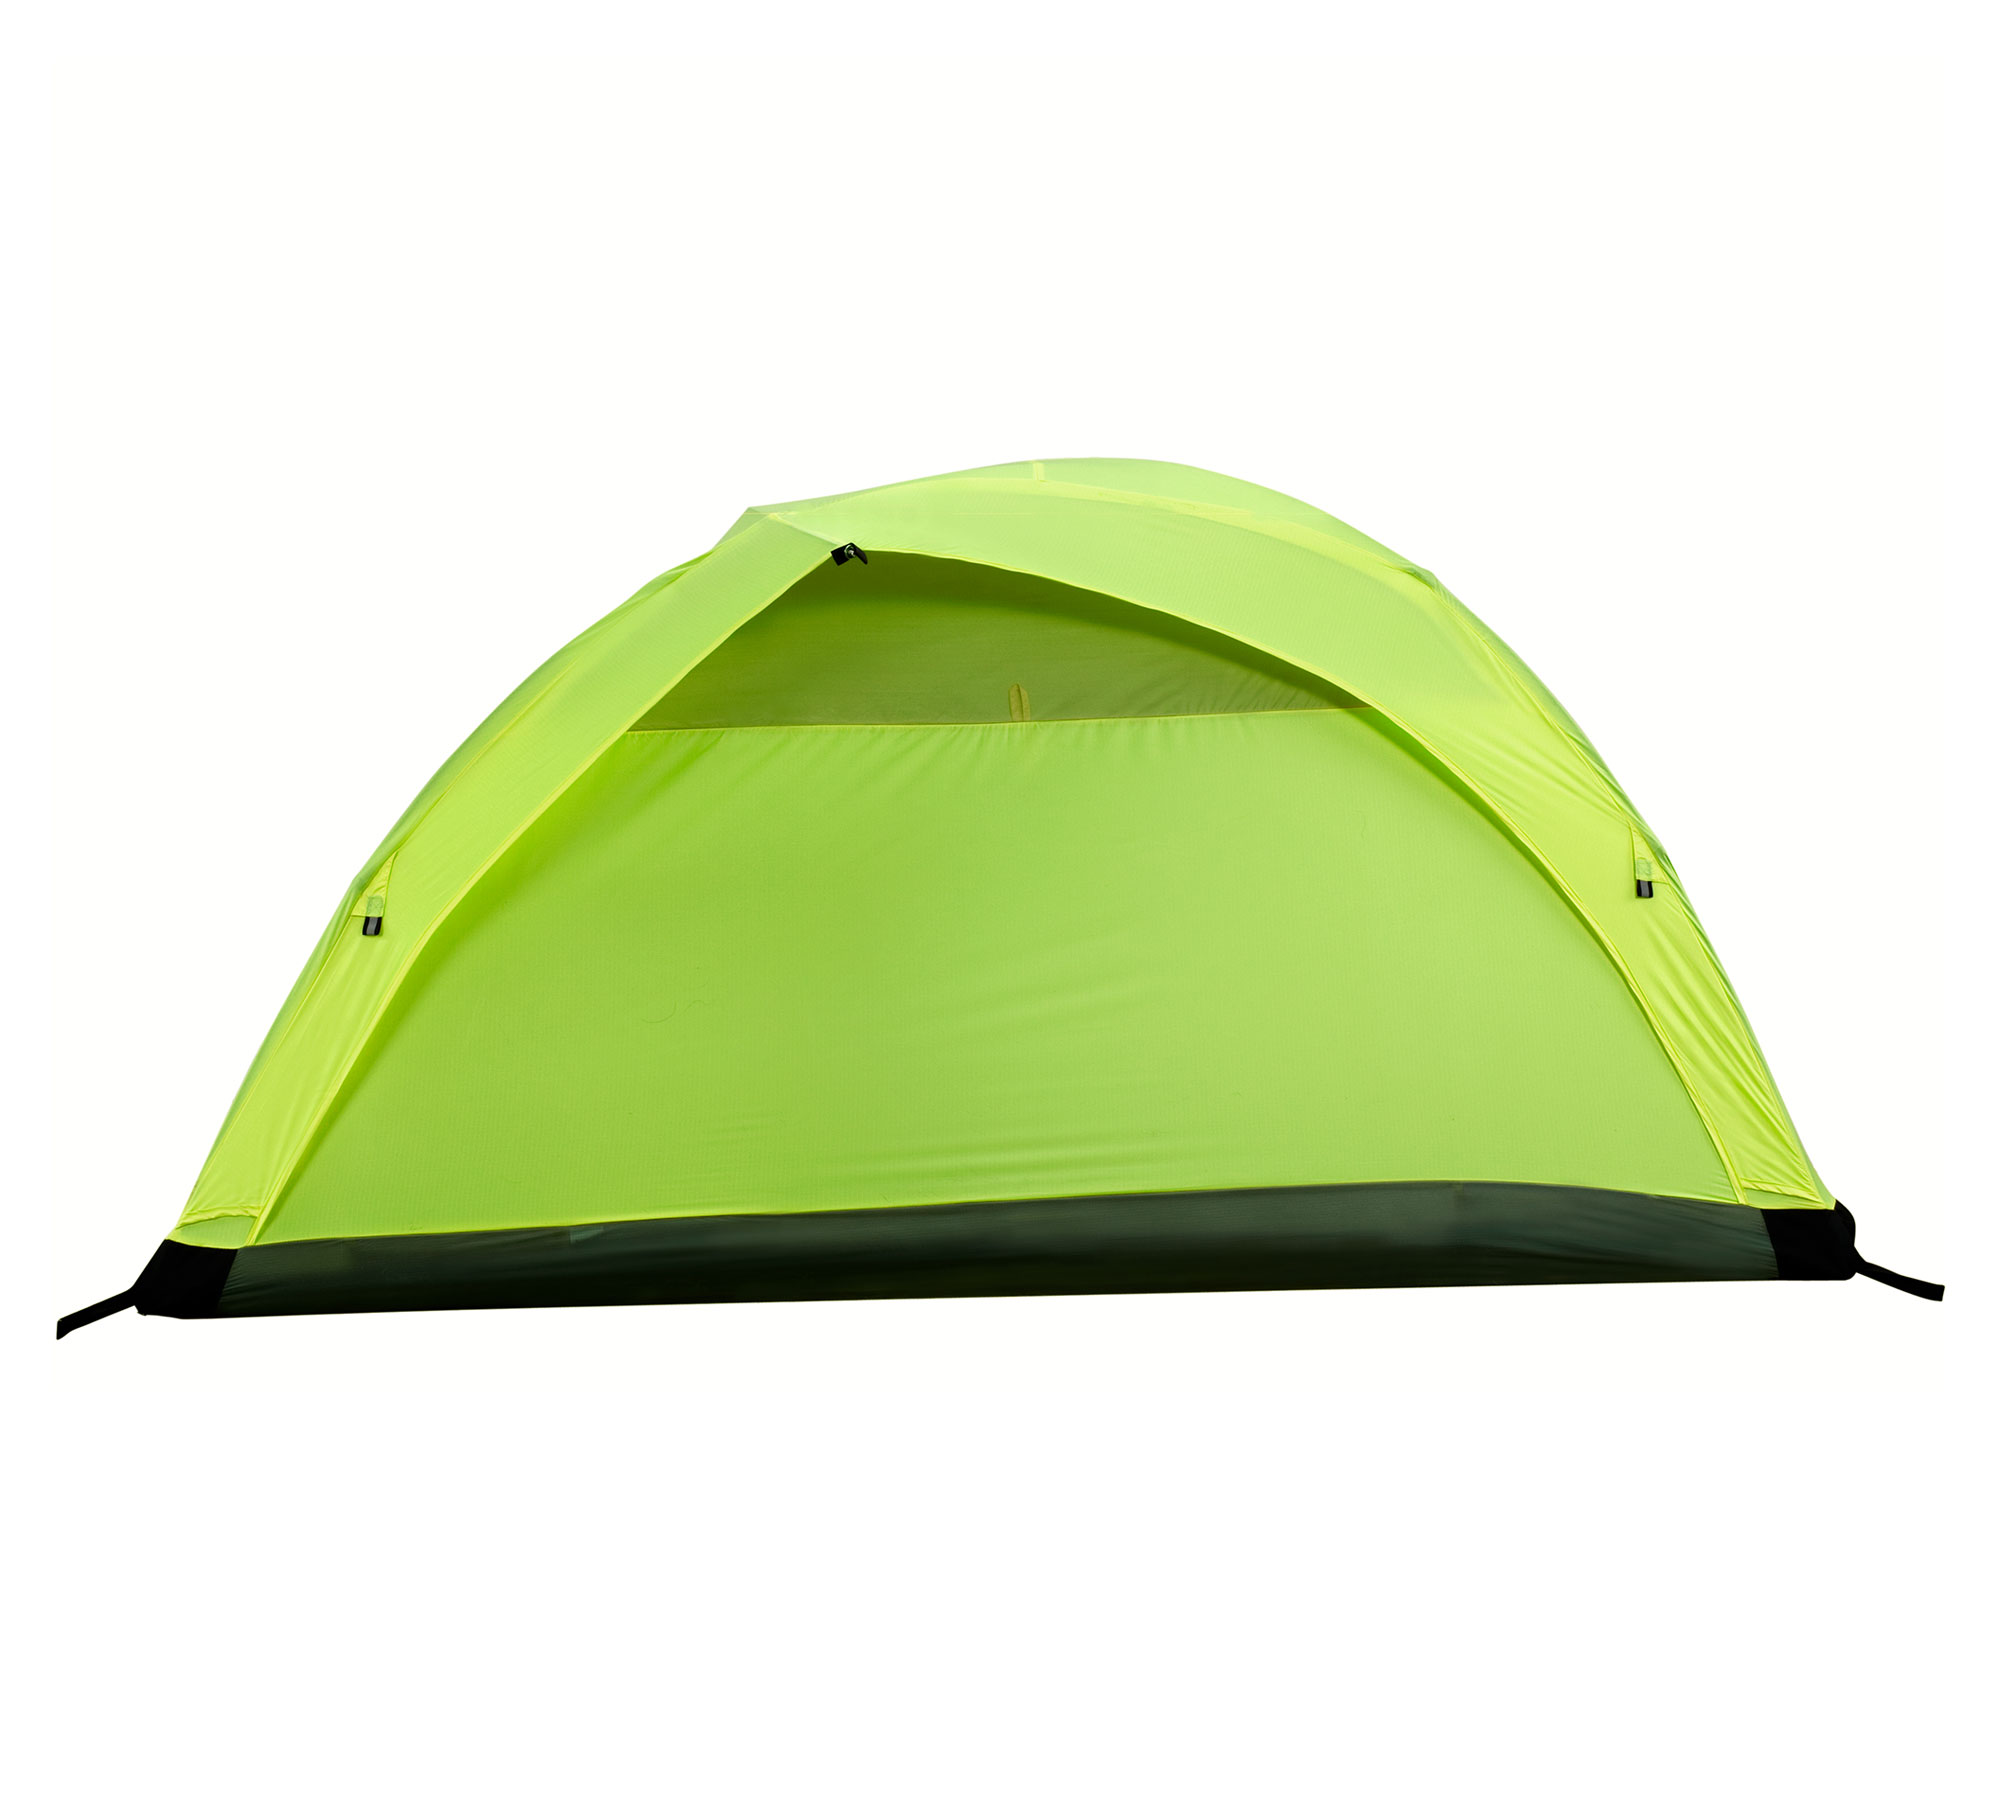 Smart camping. Палатка Black Diamond Firstlight. Black Diamond палатка i-Tent. Marmot Earlylight 2p. Палатка Black Diamond Skylight.